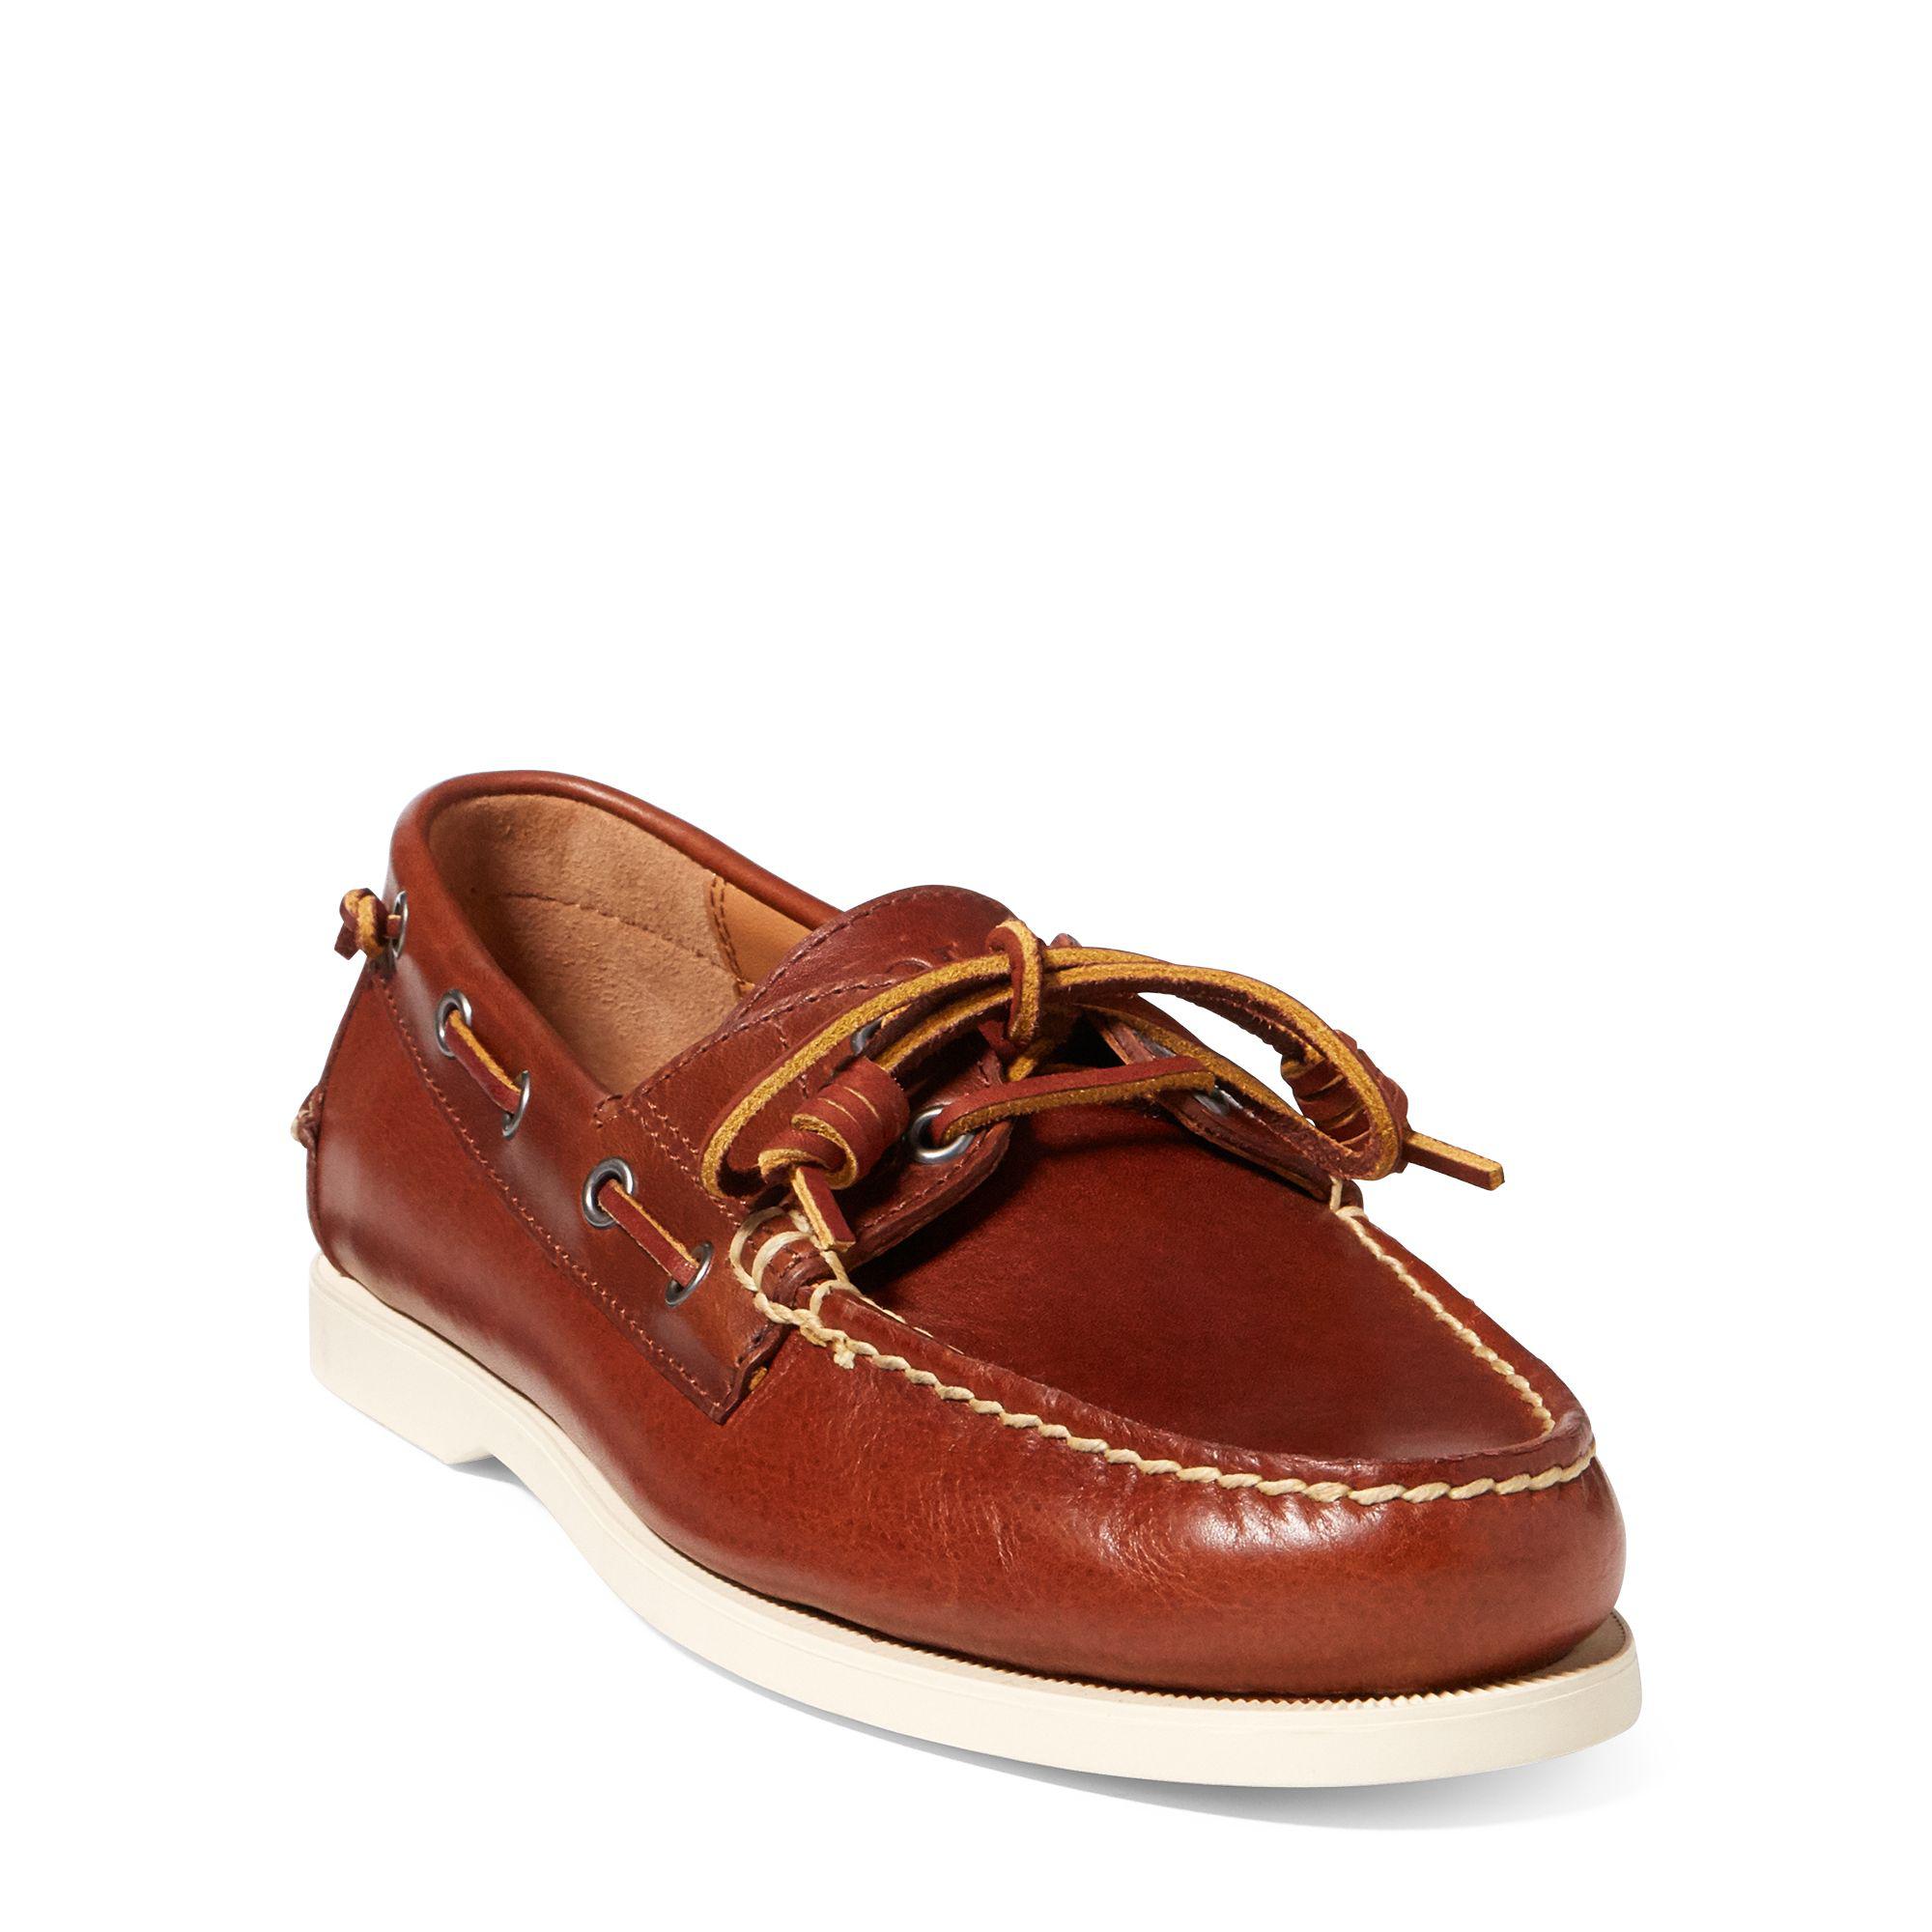 Polo Ralph Lauren Merton Leather Boat Shoe in Brown for Men - Lyst